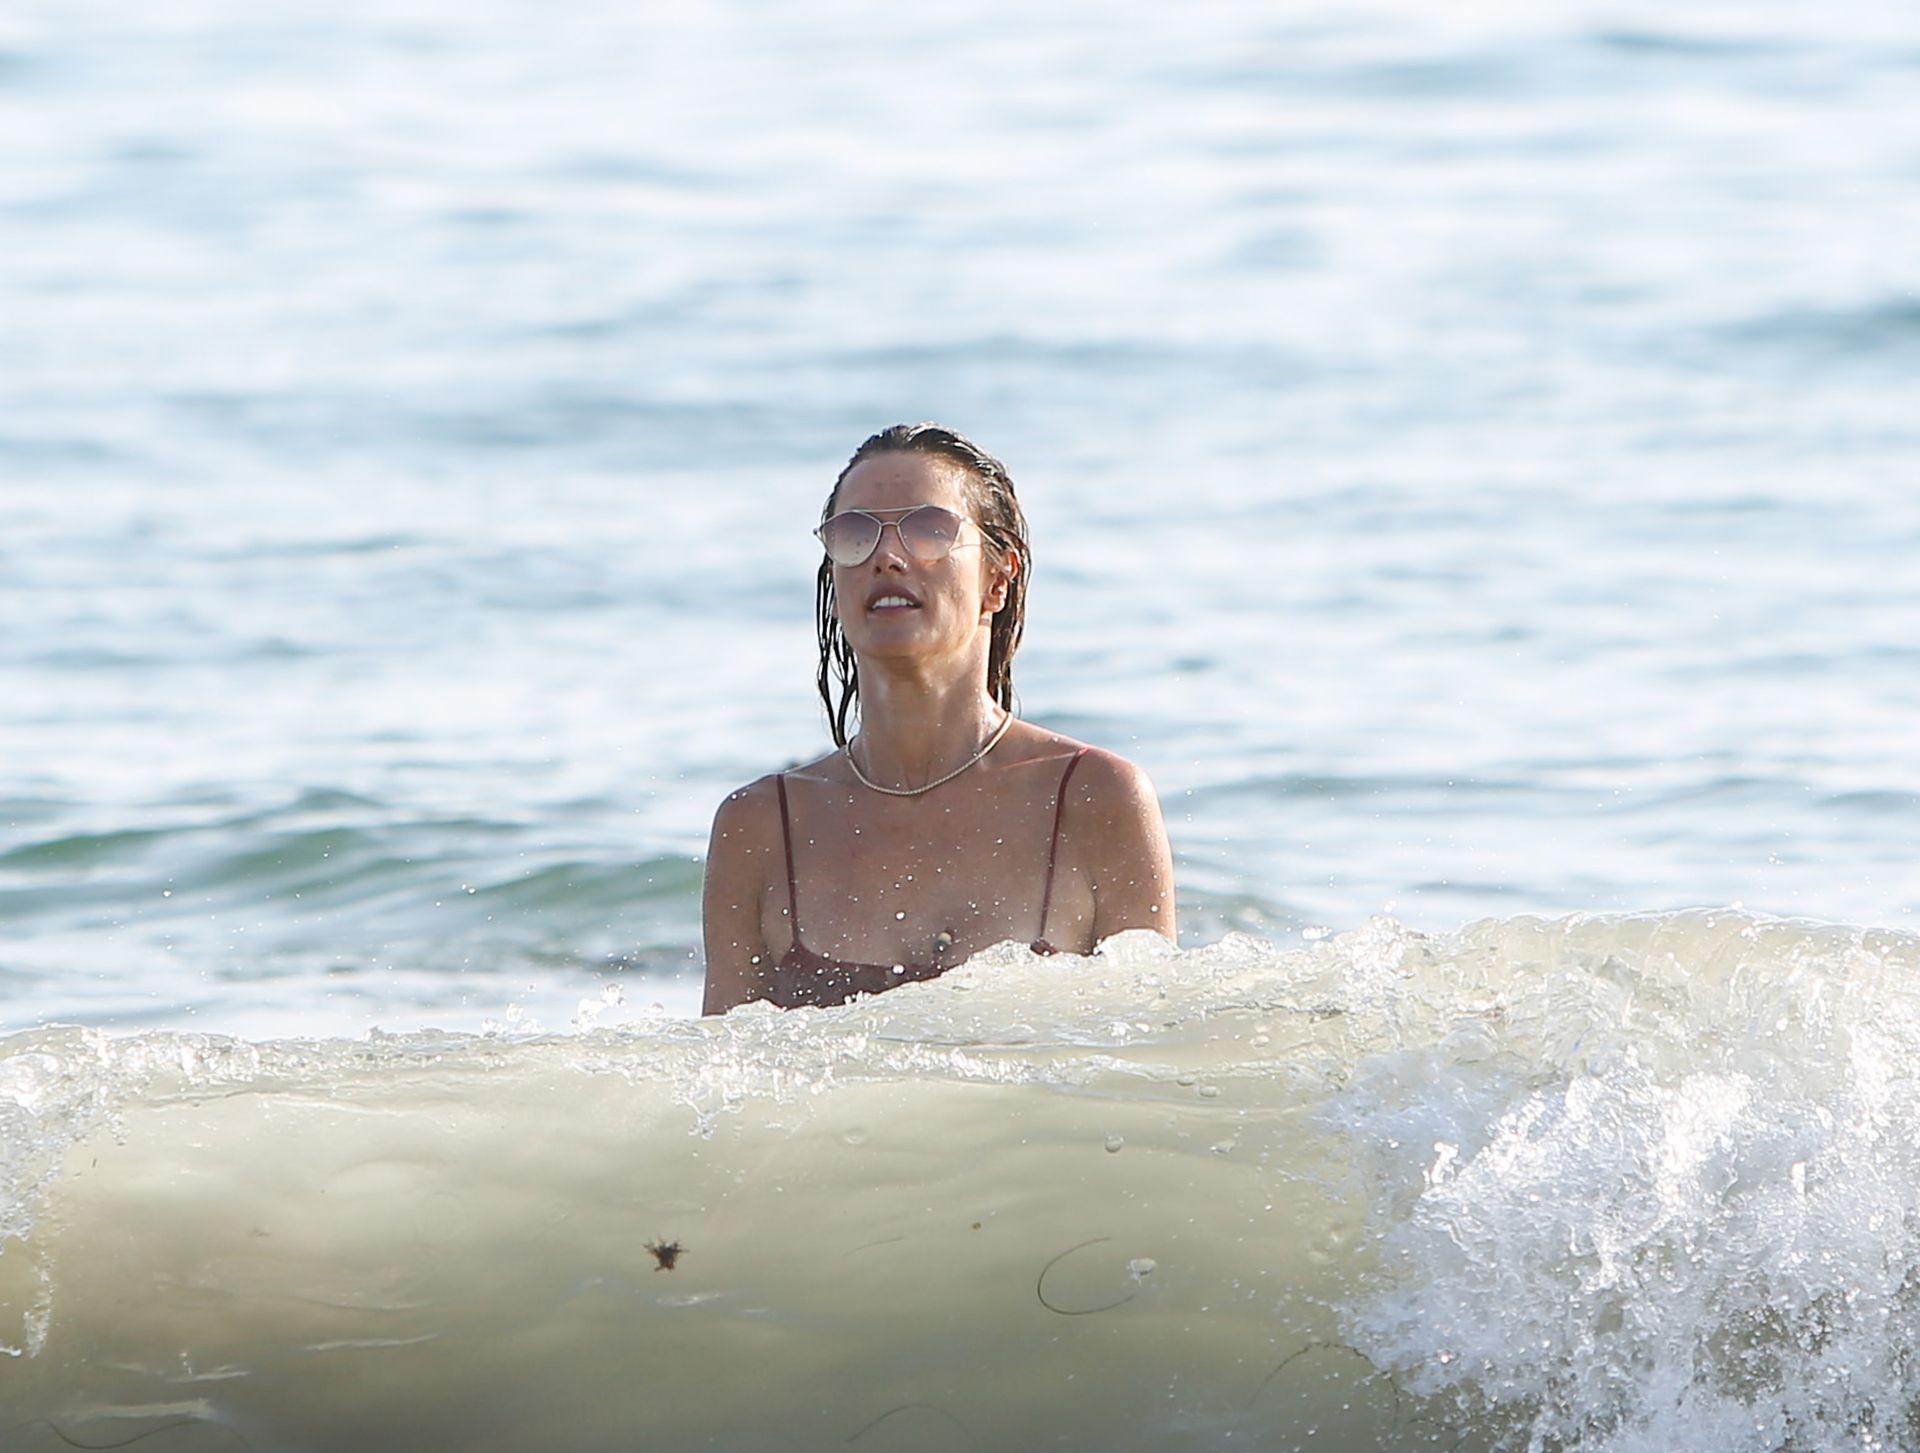 Alessandra Ambrosio Enjoys a Day at the Beach (89 Photos)